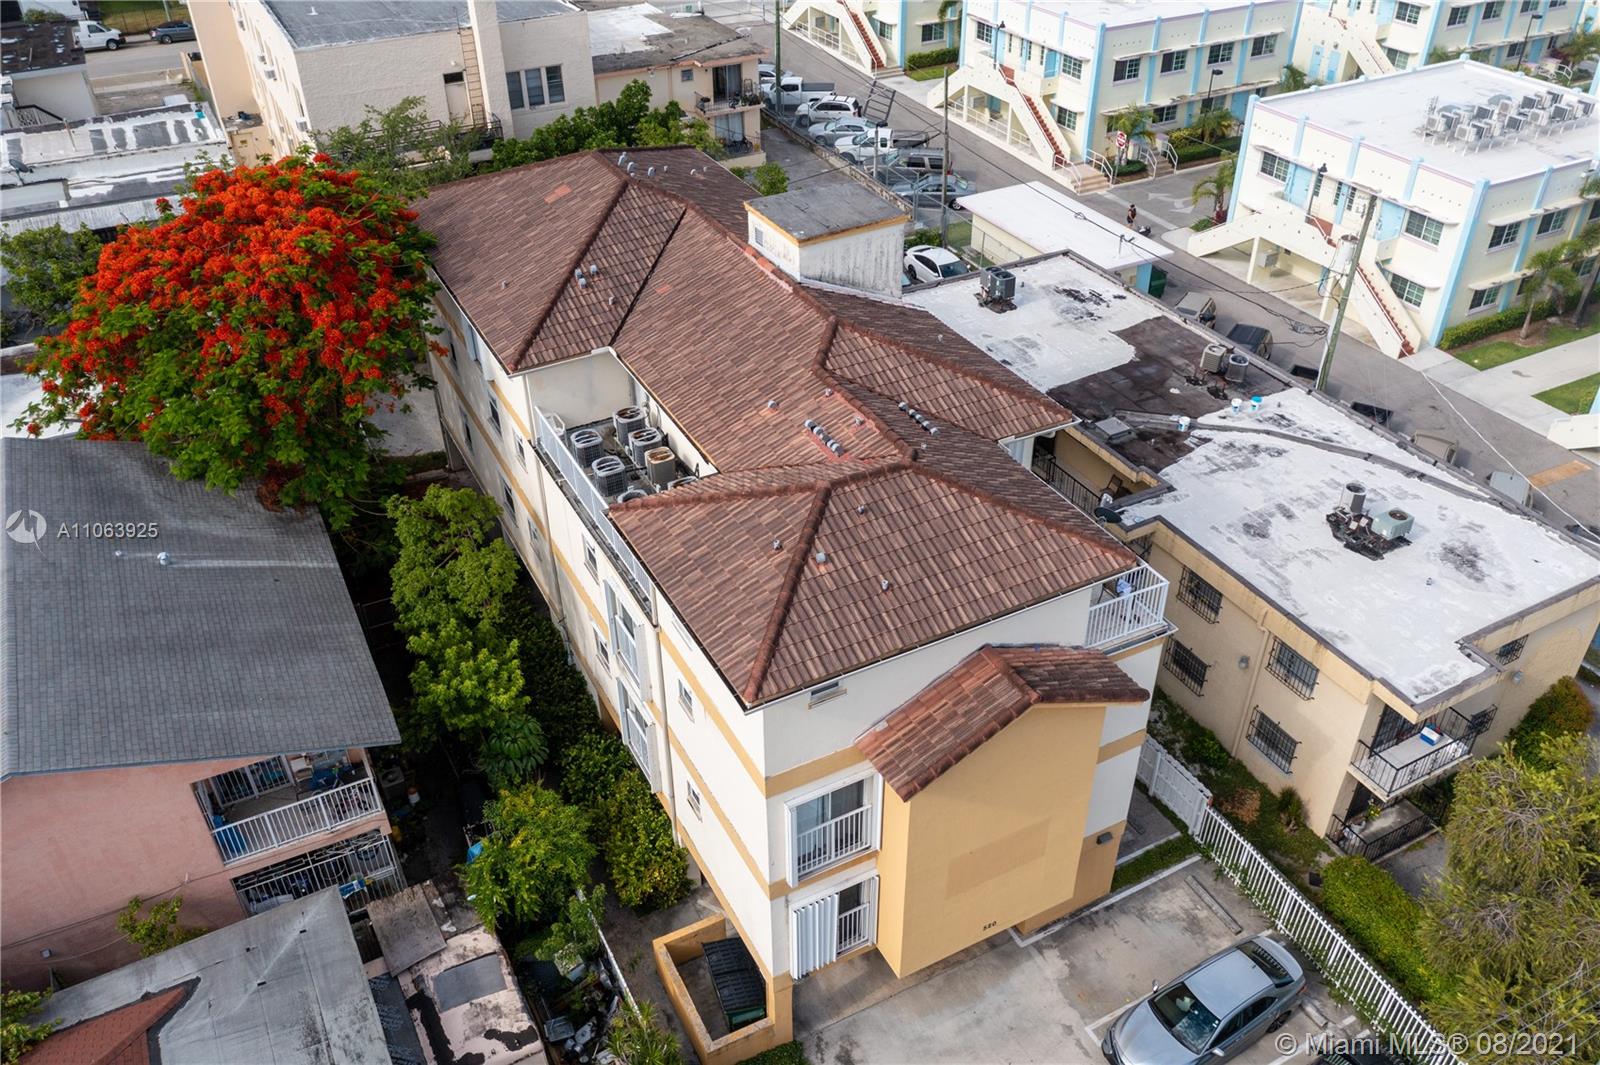 Photo 1 of Parkview Apartments Condo Apt 202 in Miami - MLS A11063925